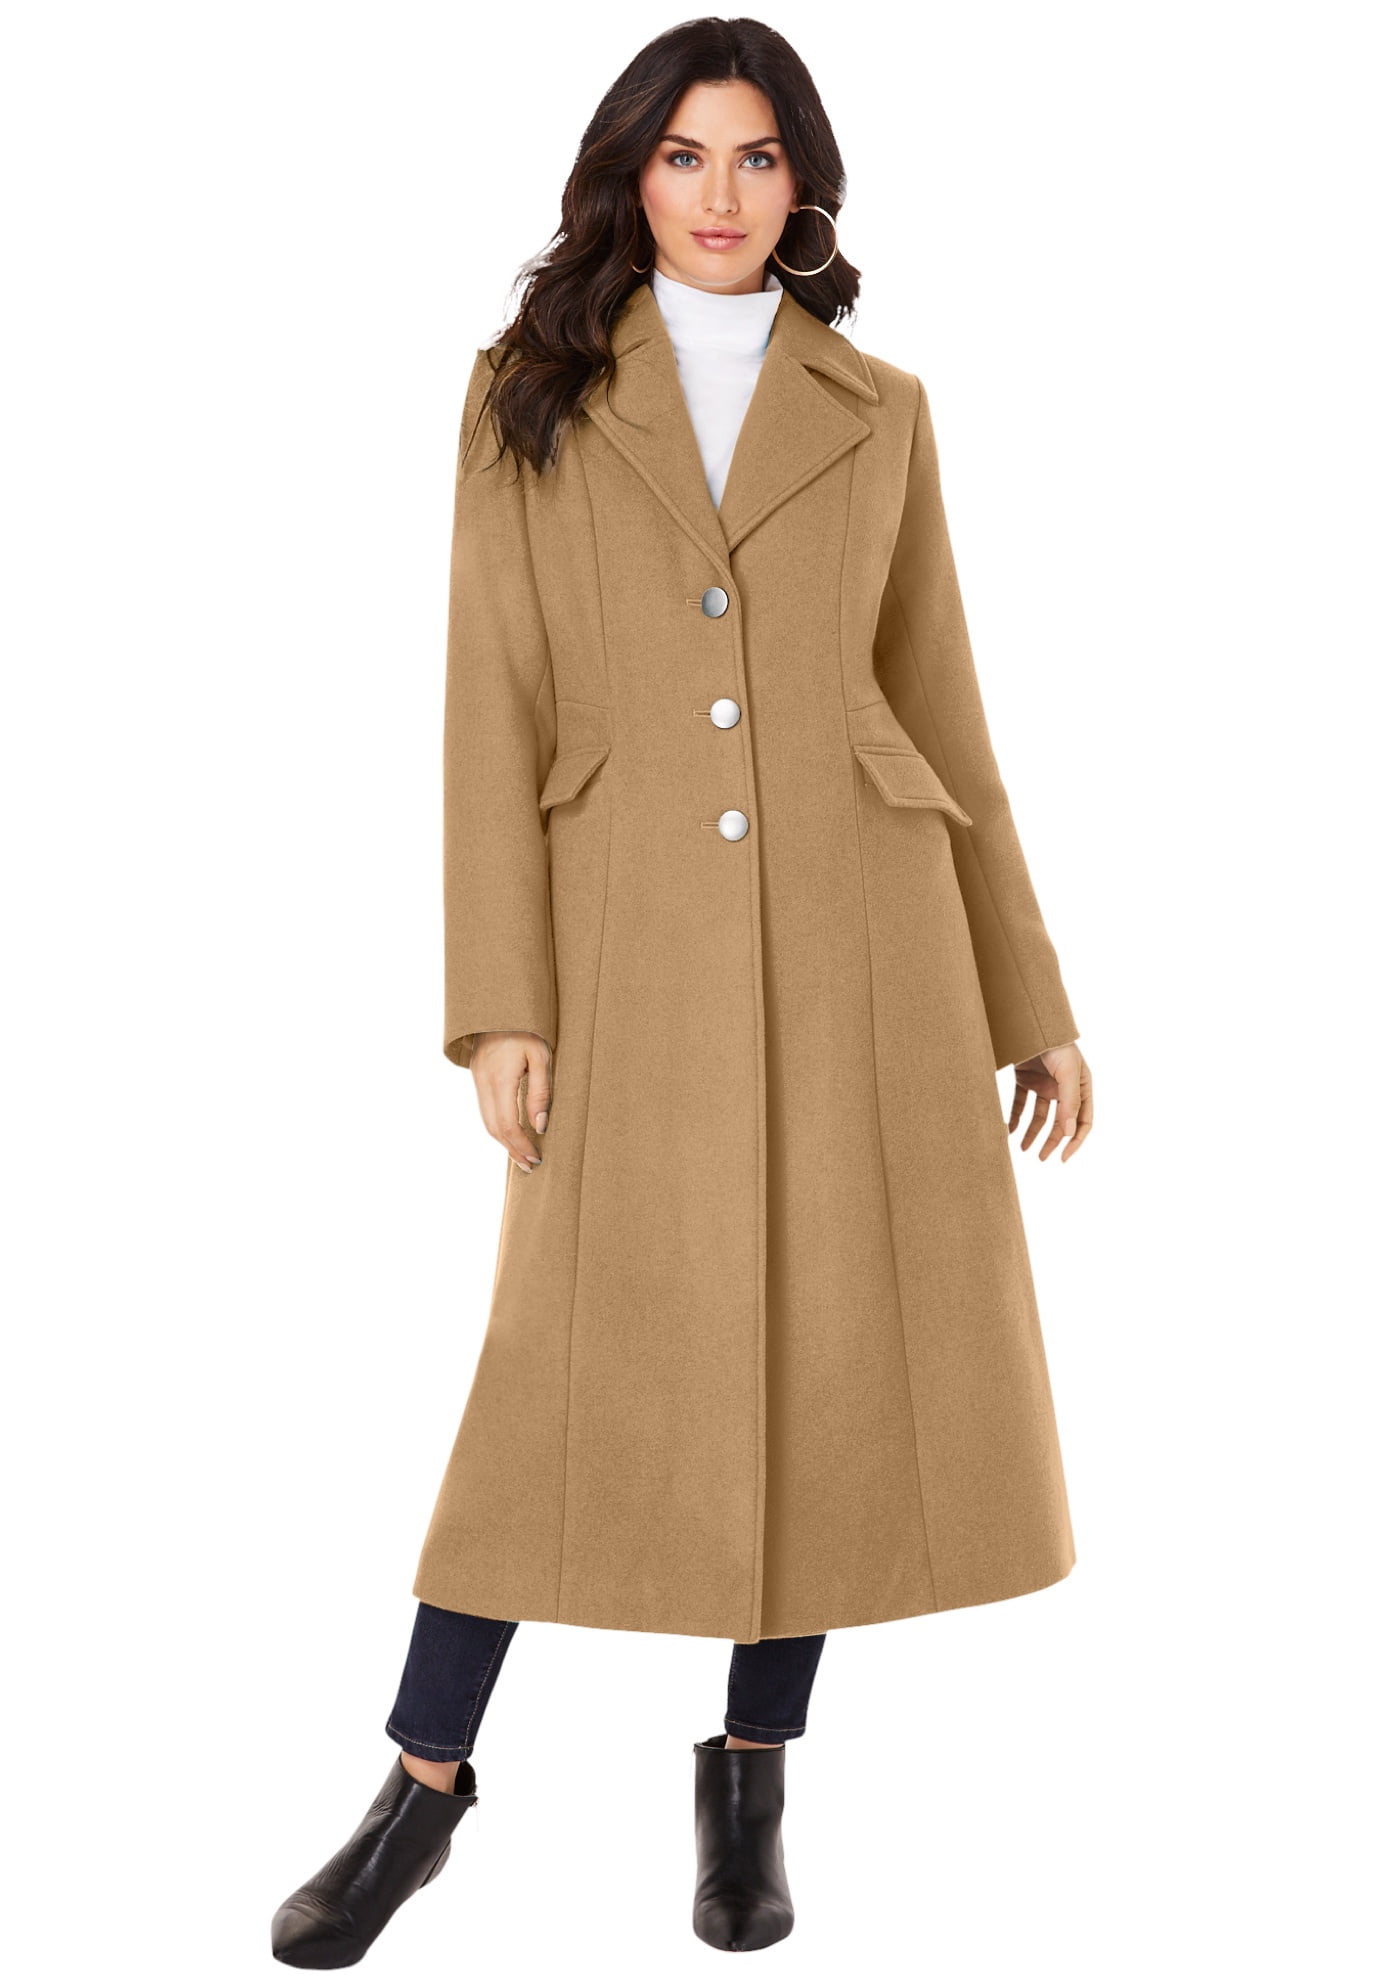 Black Thick Winter Women Coat Vintage Overcoat Wool Lapel Warm Solid 2018 Coats,Black,L